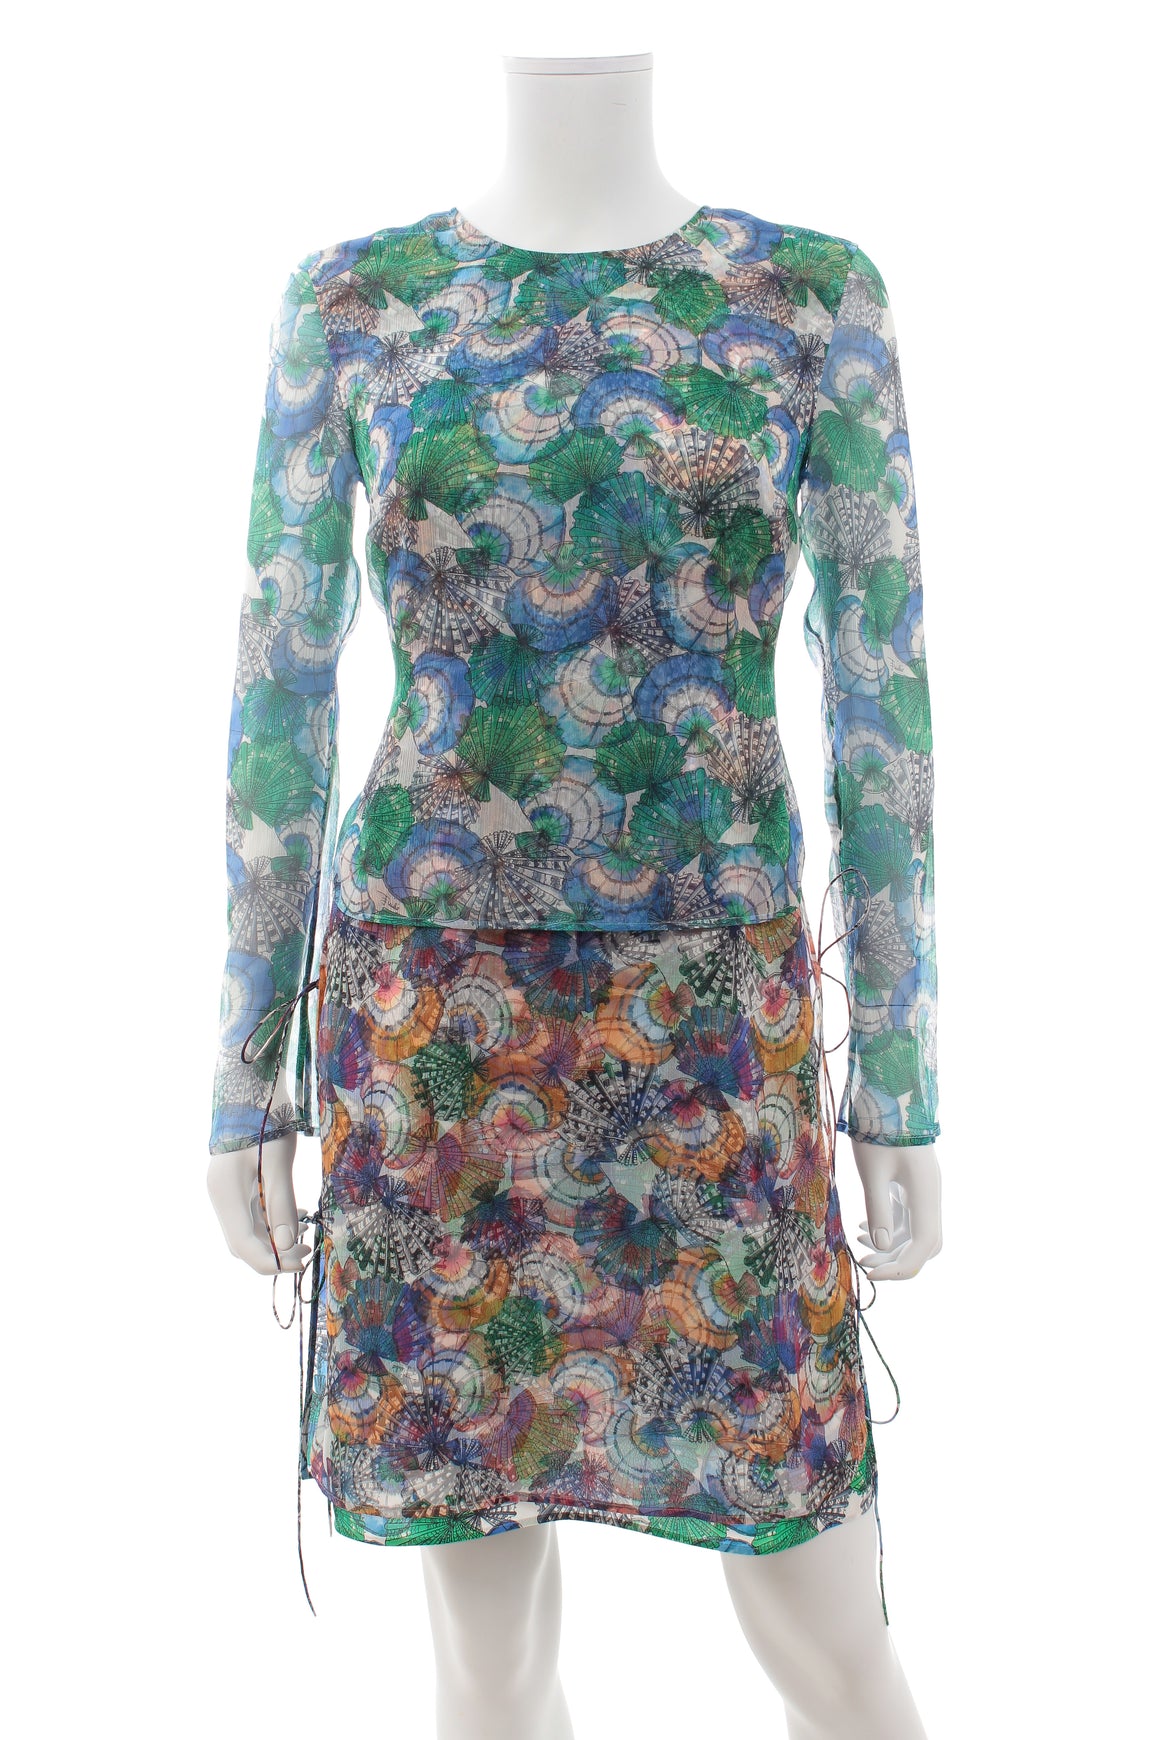 Emilio Pucci Printed Silk Chiffon Dress